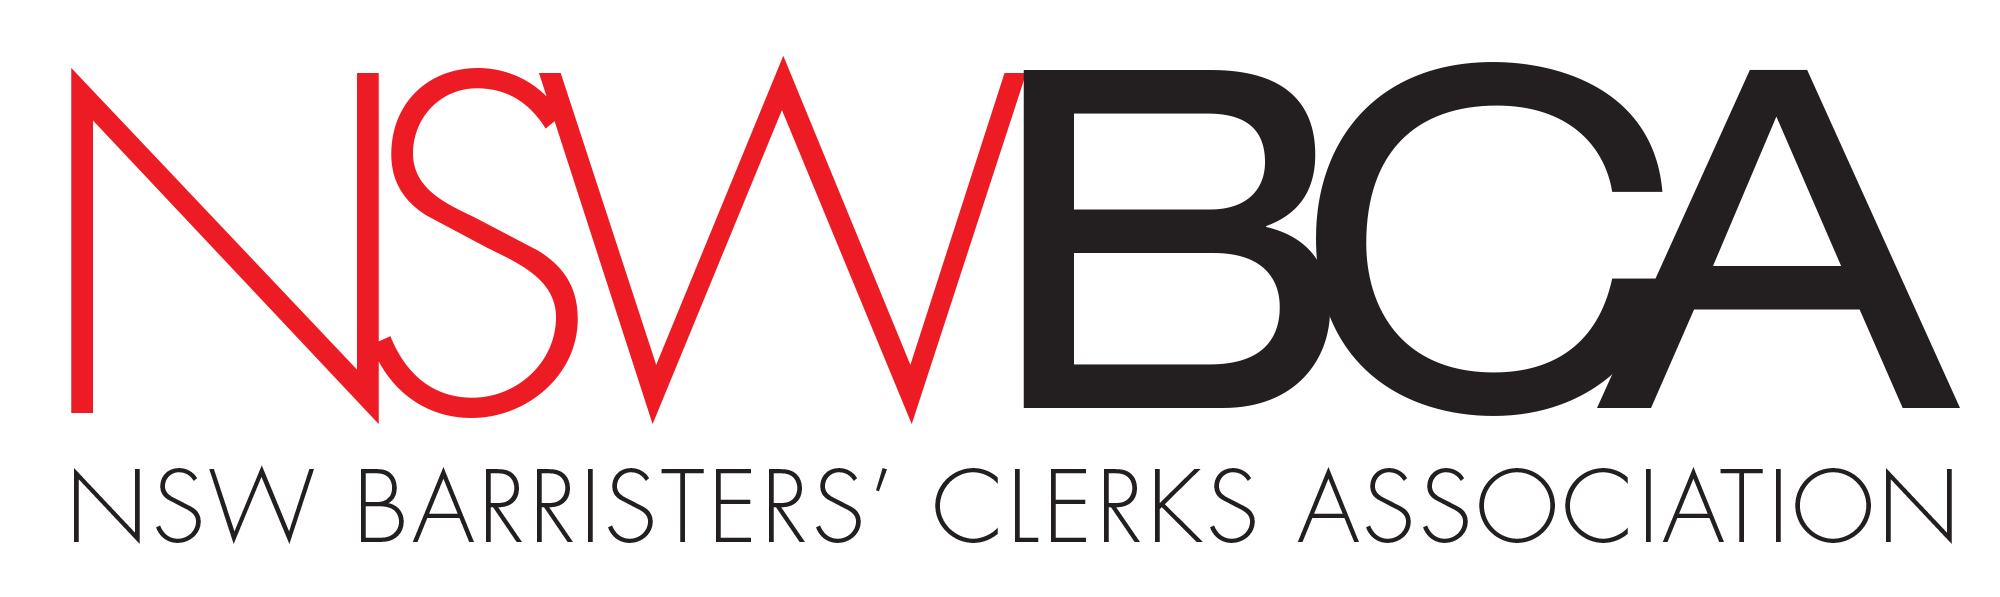 NSW Barristers Clerks Association | NSWBCA